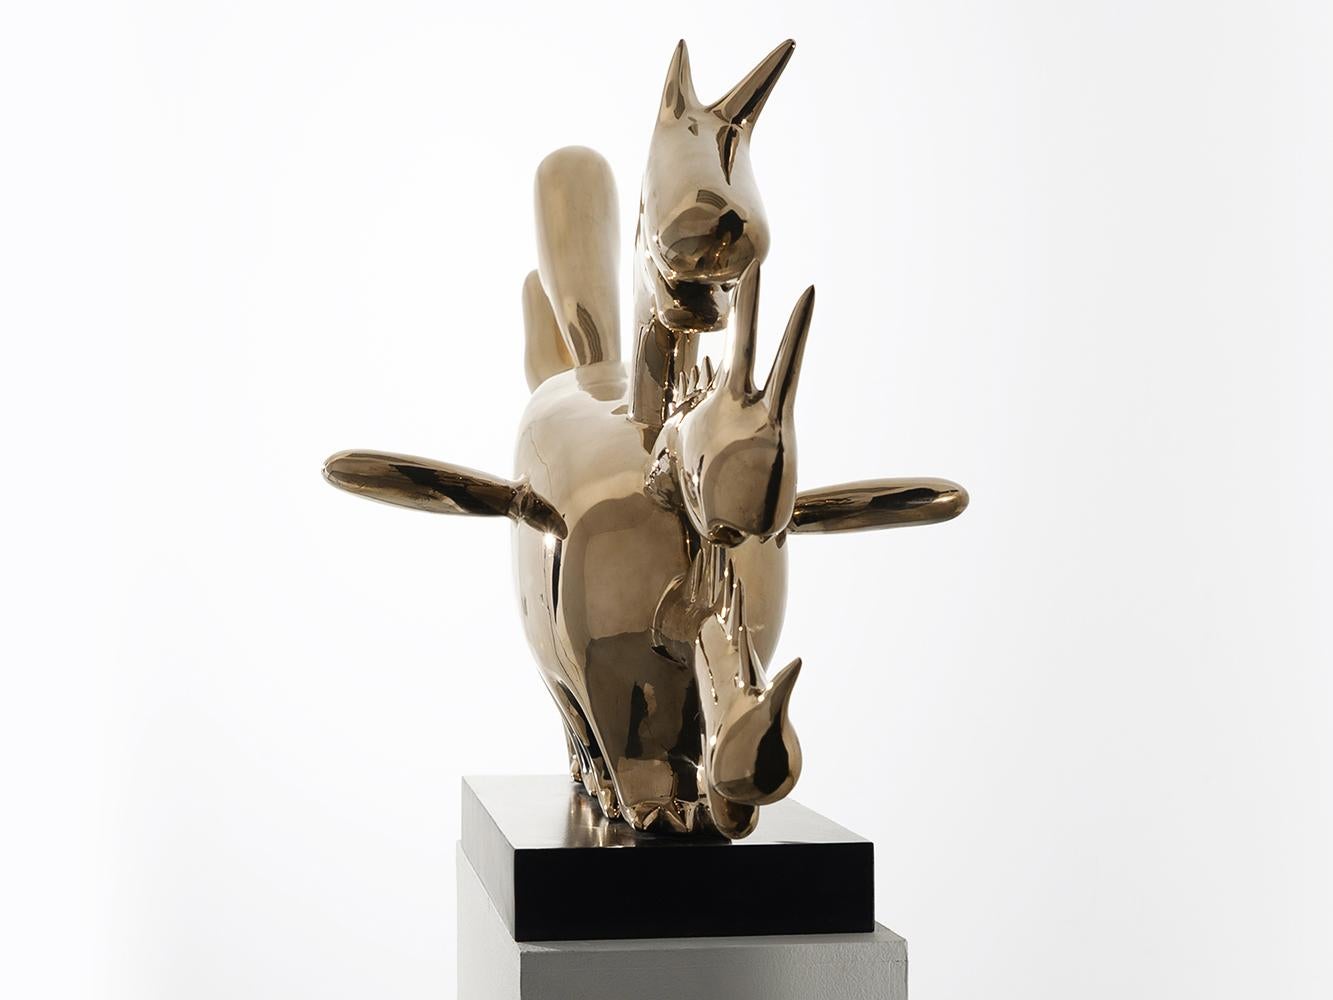 Polycephalous by Marcelo Martin Burgos - Bronze sculpture, golden, fantastic For Sale 2